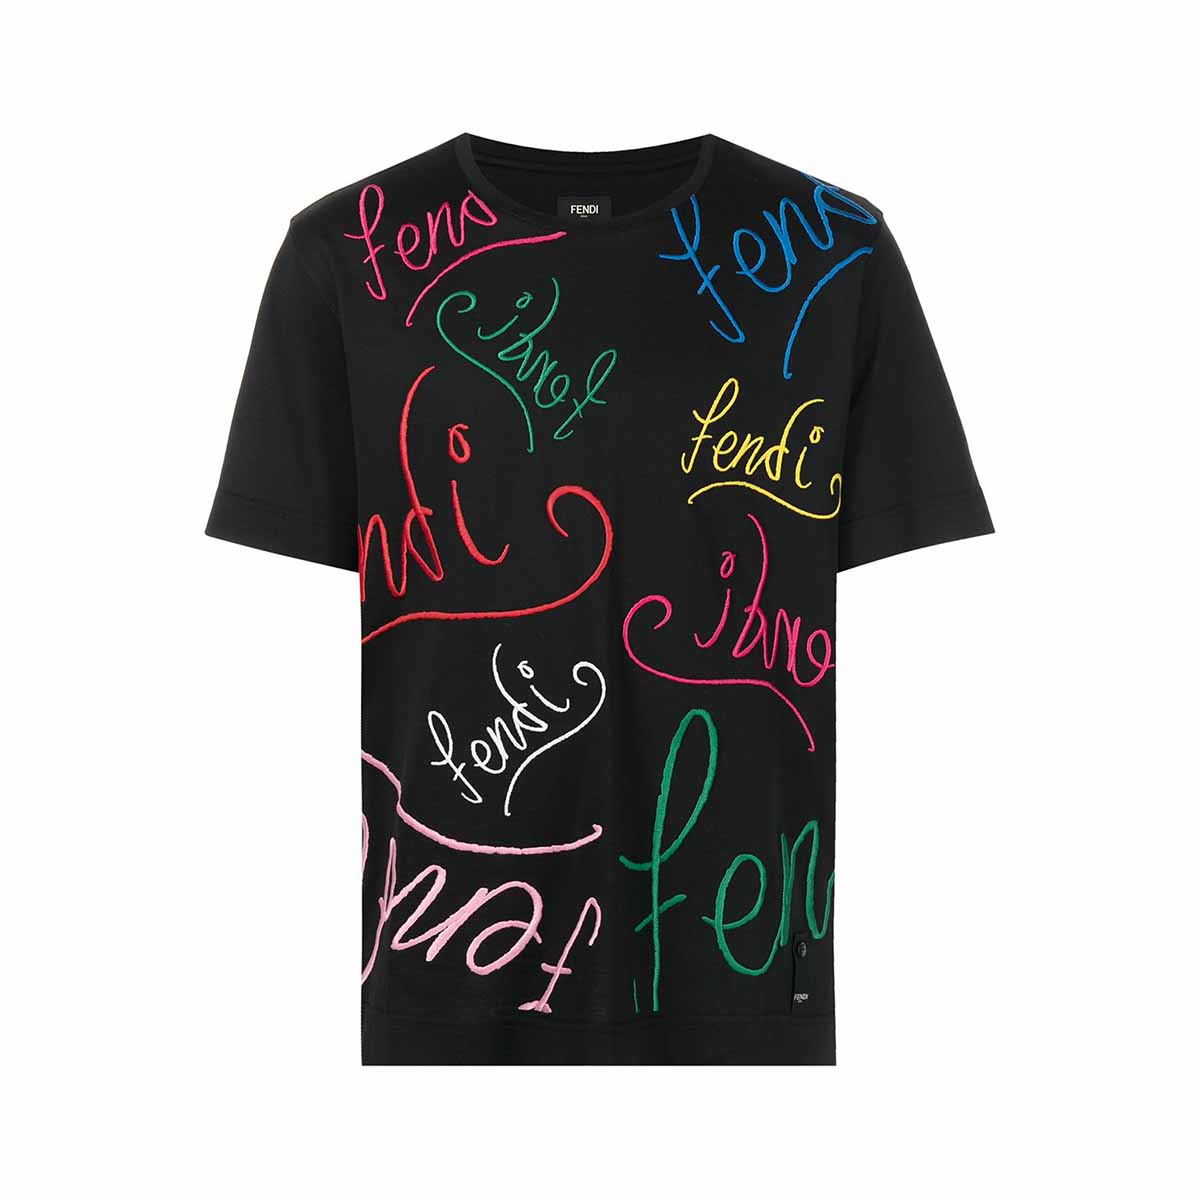 Fendi x Noel Fielding Artist Embroidered T-Shirt